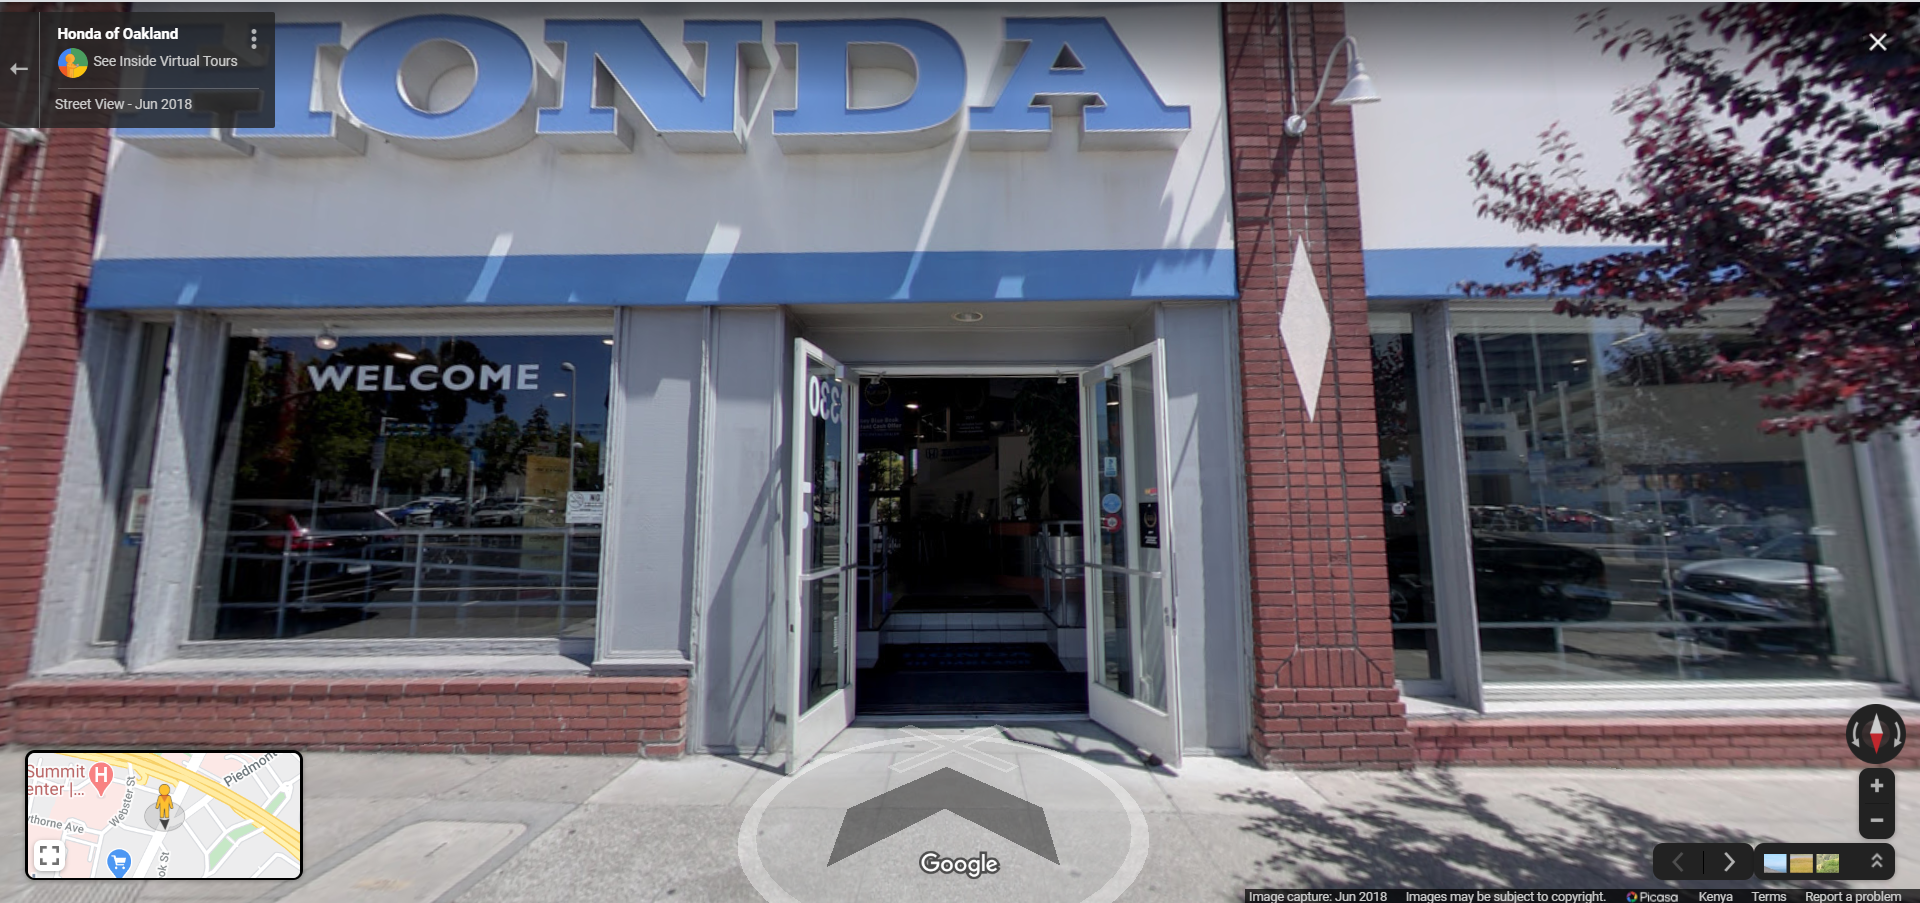 Honda Dealerships